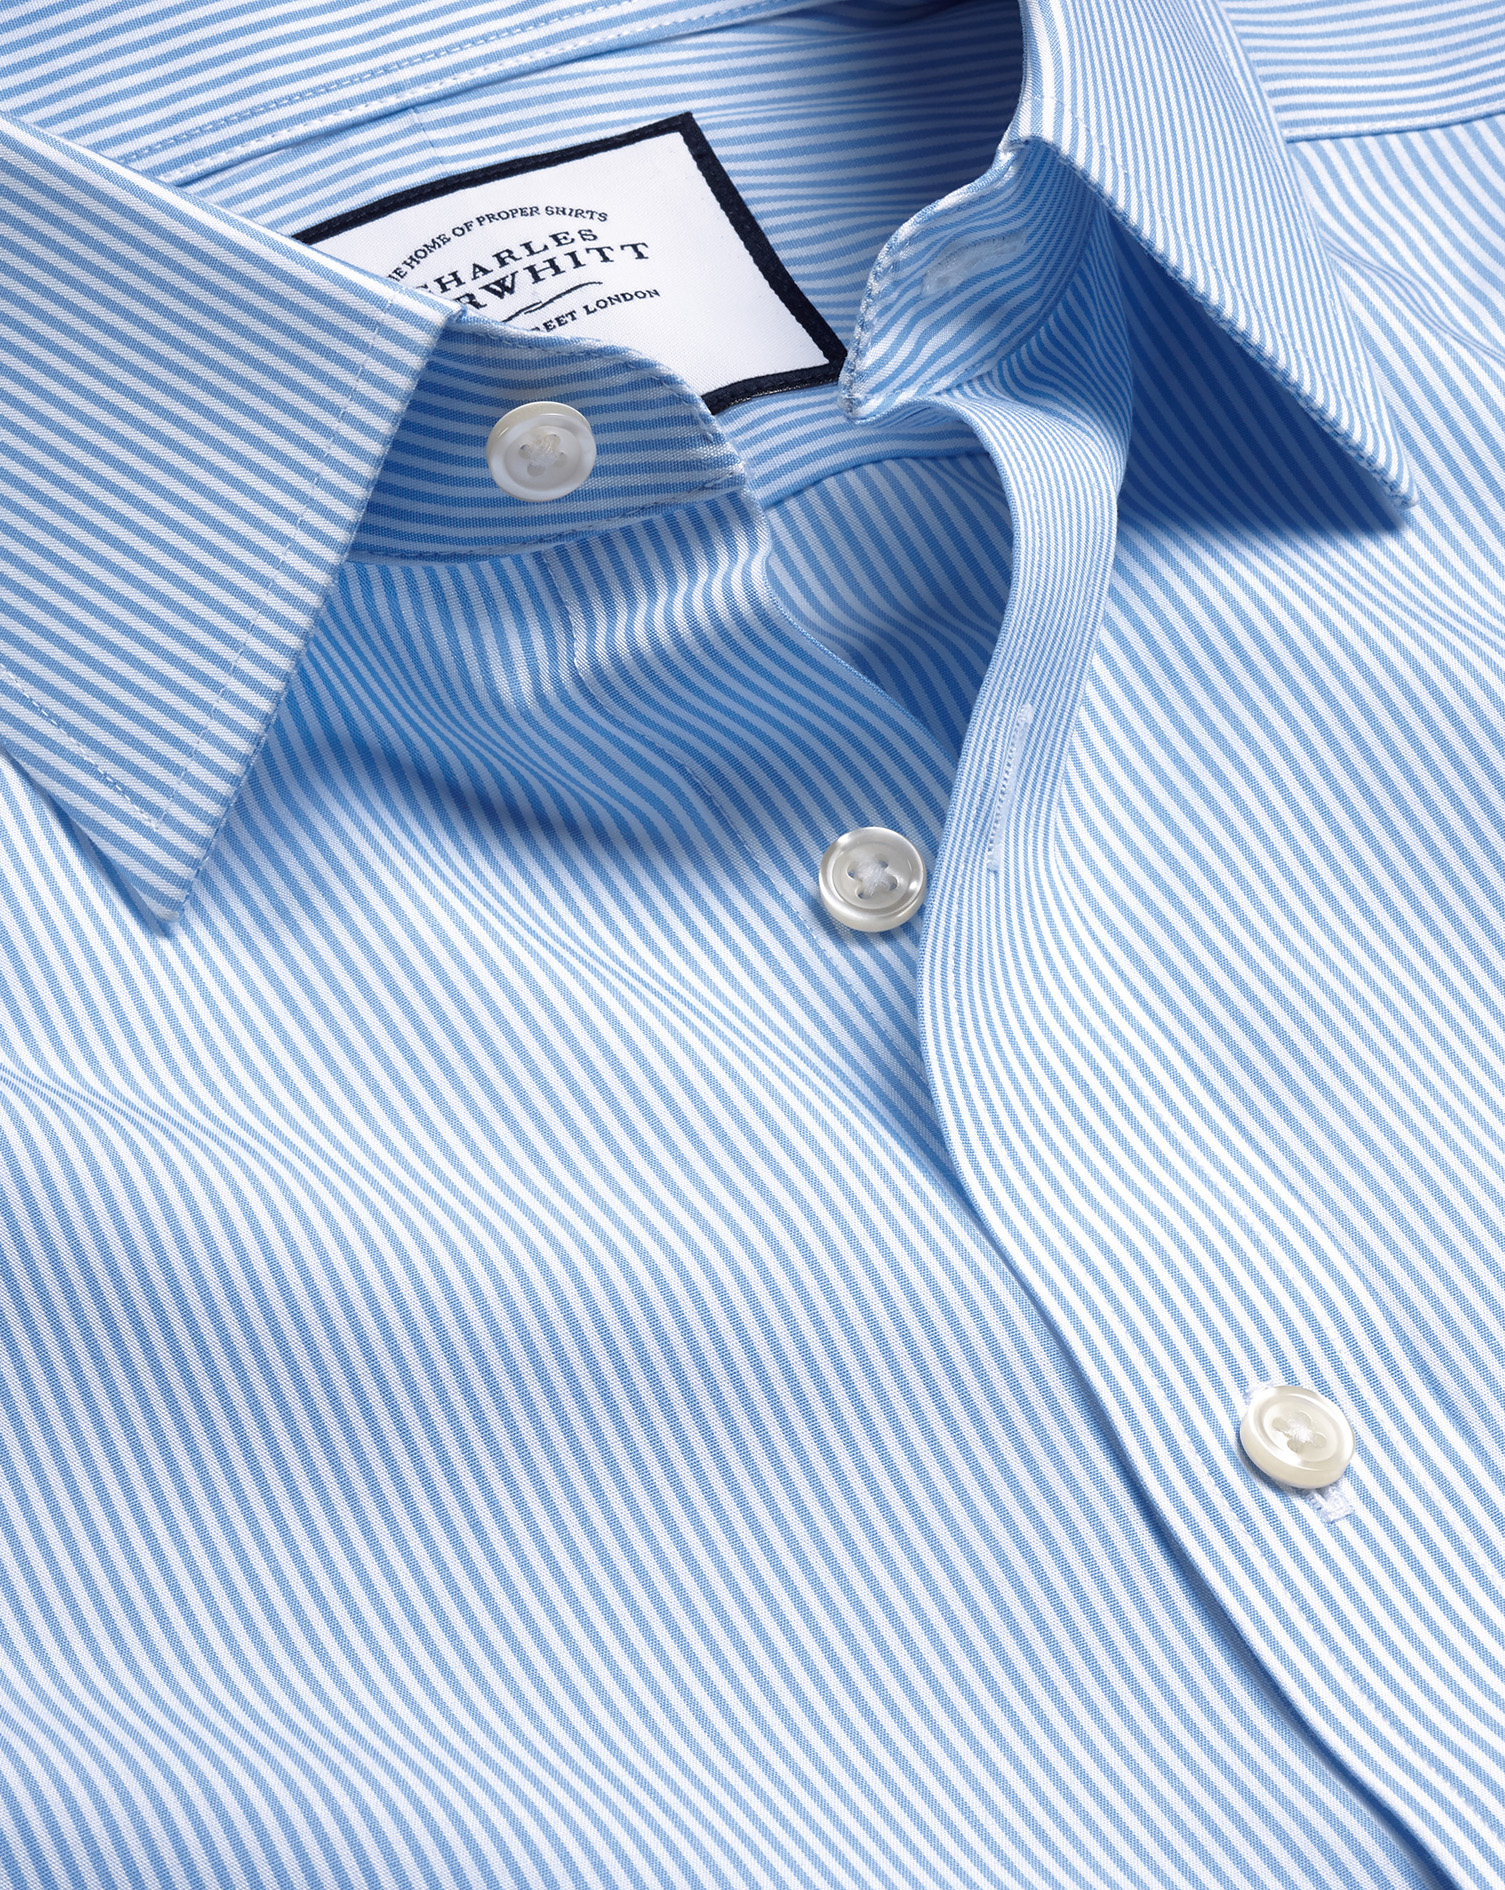 Men's Charles Tyrwhitt Non-Iron Bengal Stripe Dress Shirt - Cornflower Blue Single Cuff Size Small C